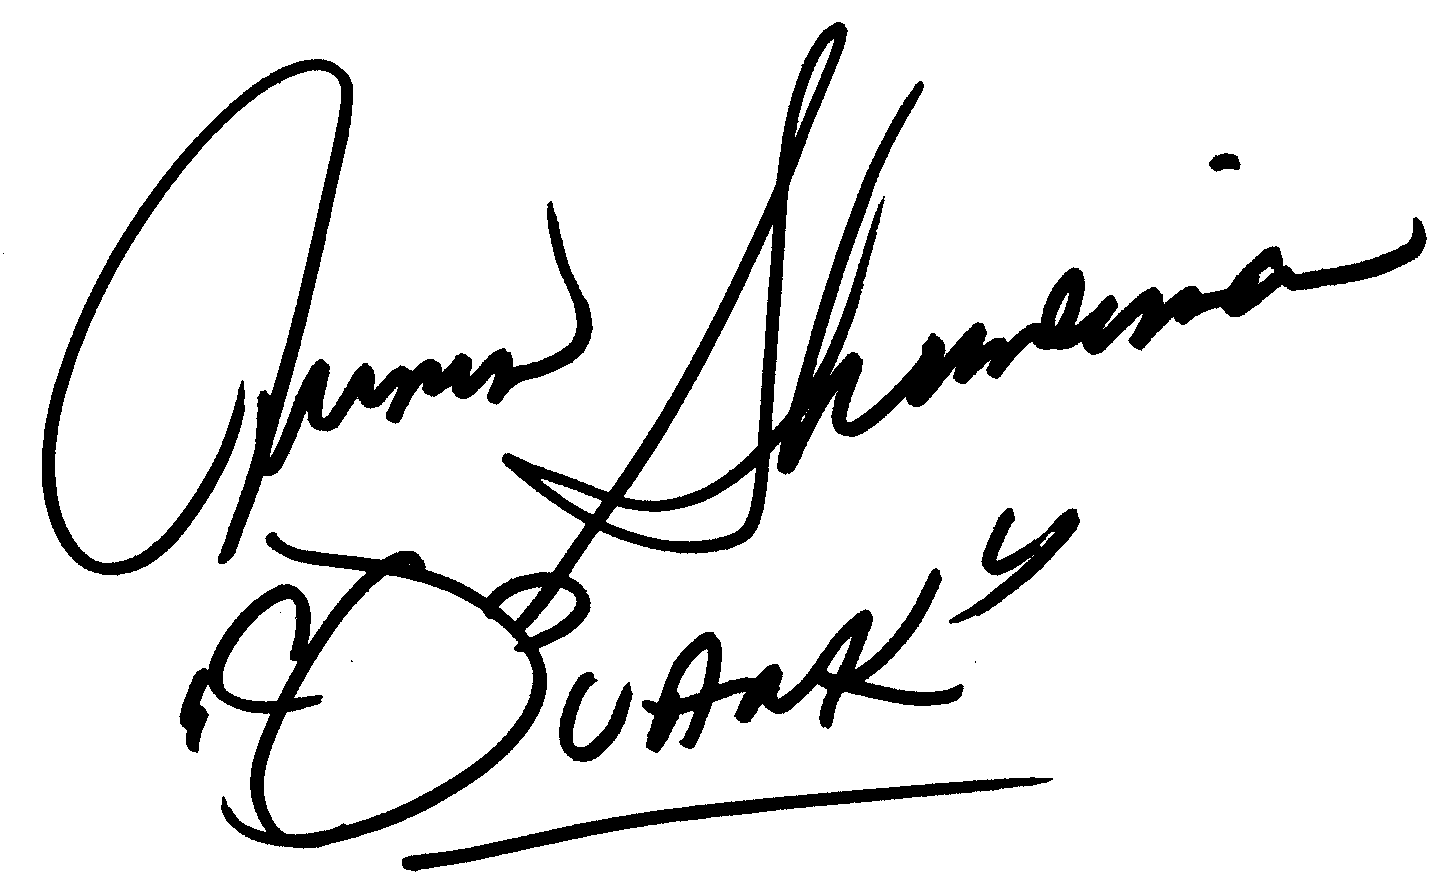 Armin Shimerman autograph facsimile